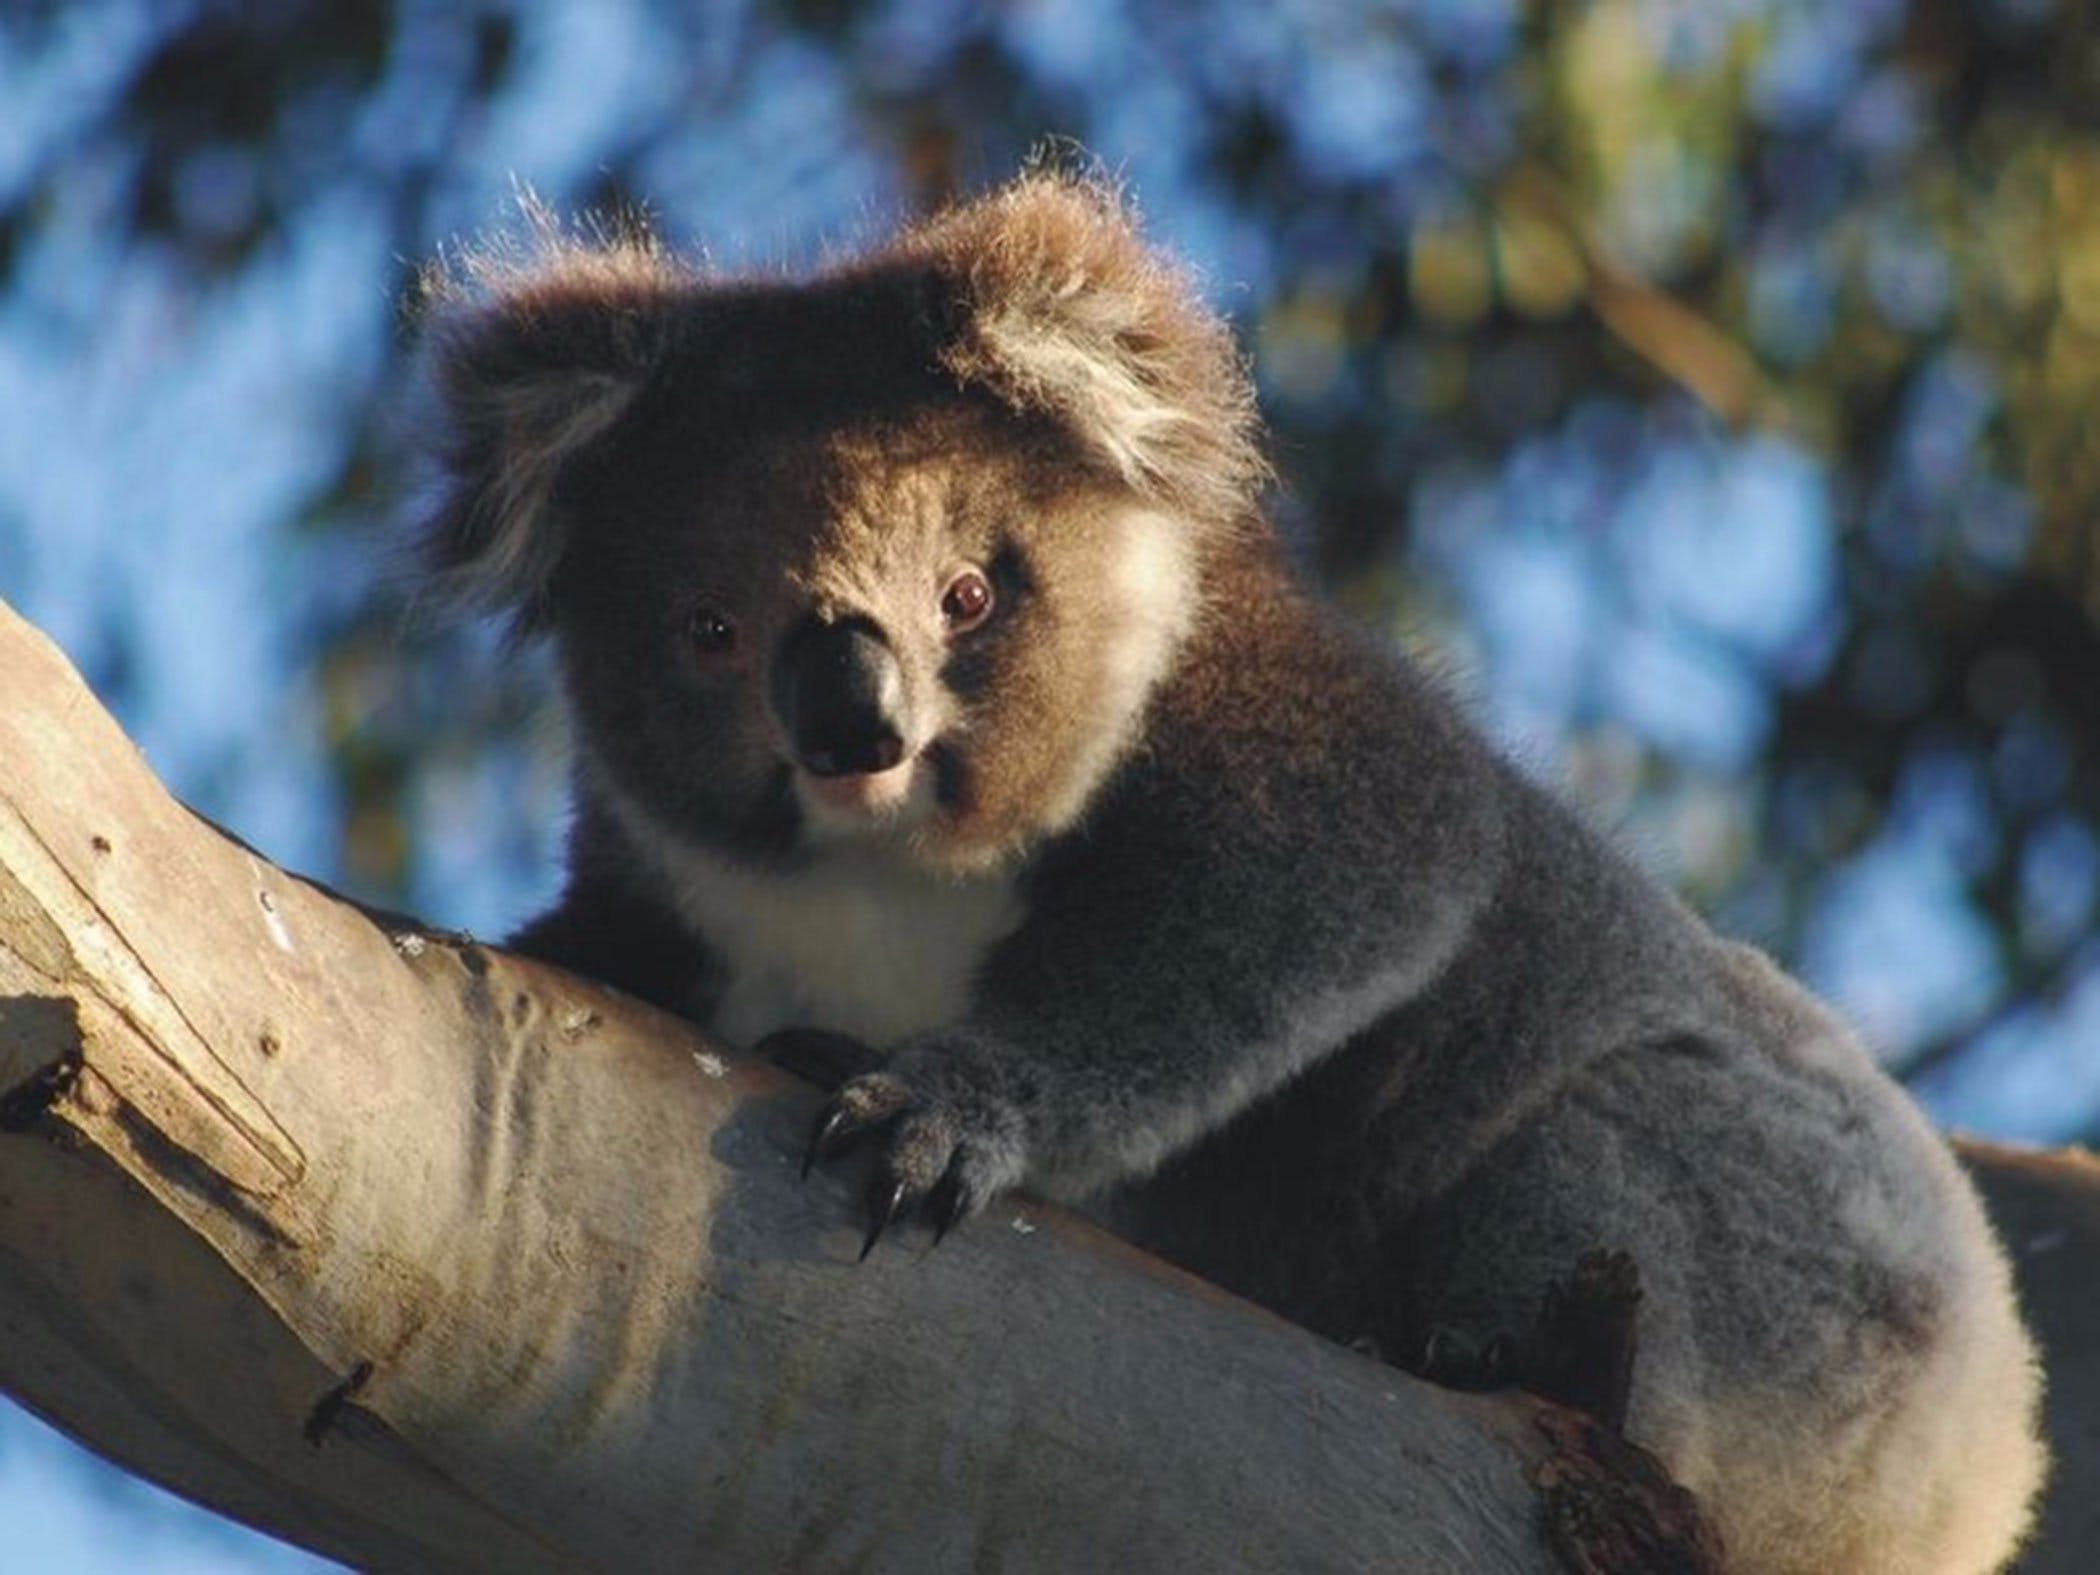 Bimbi Park Camping Under Koalas - Carnarvon Accommodation